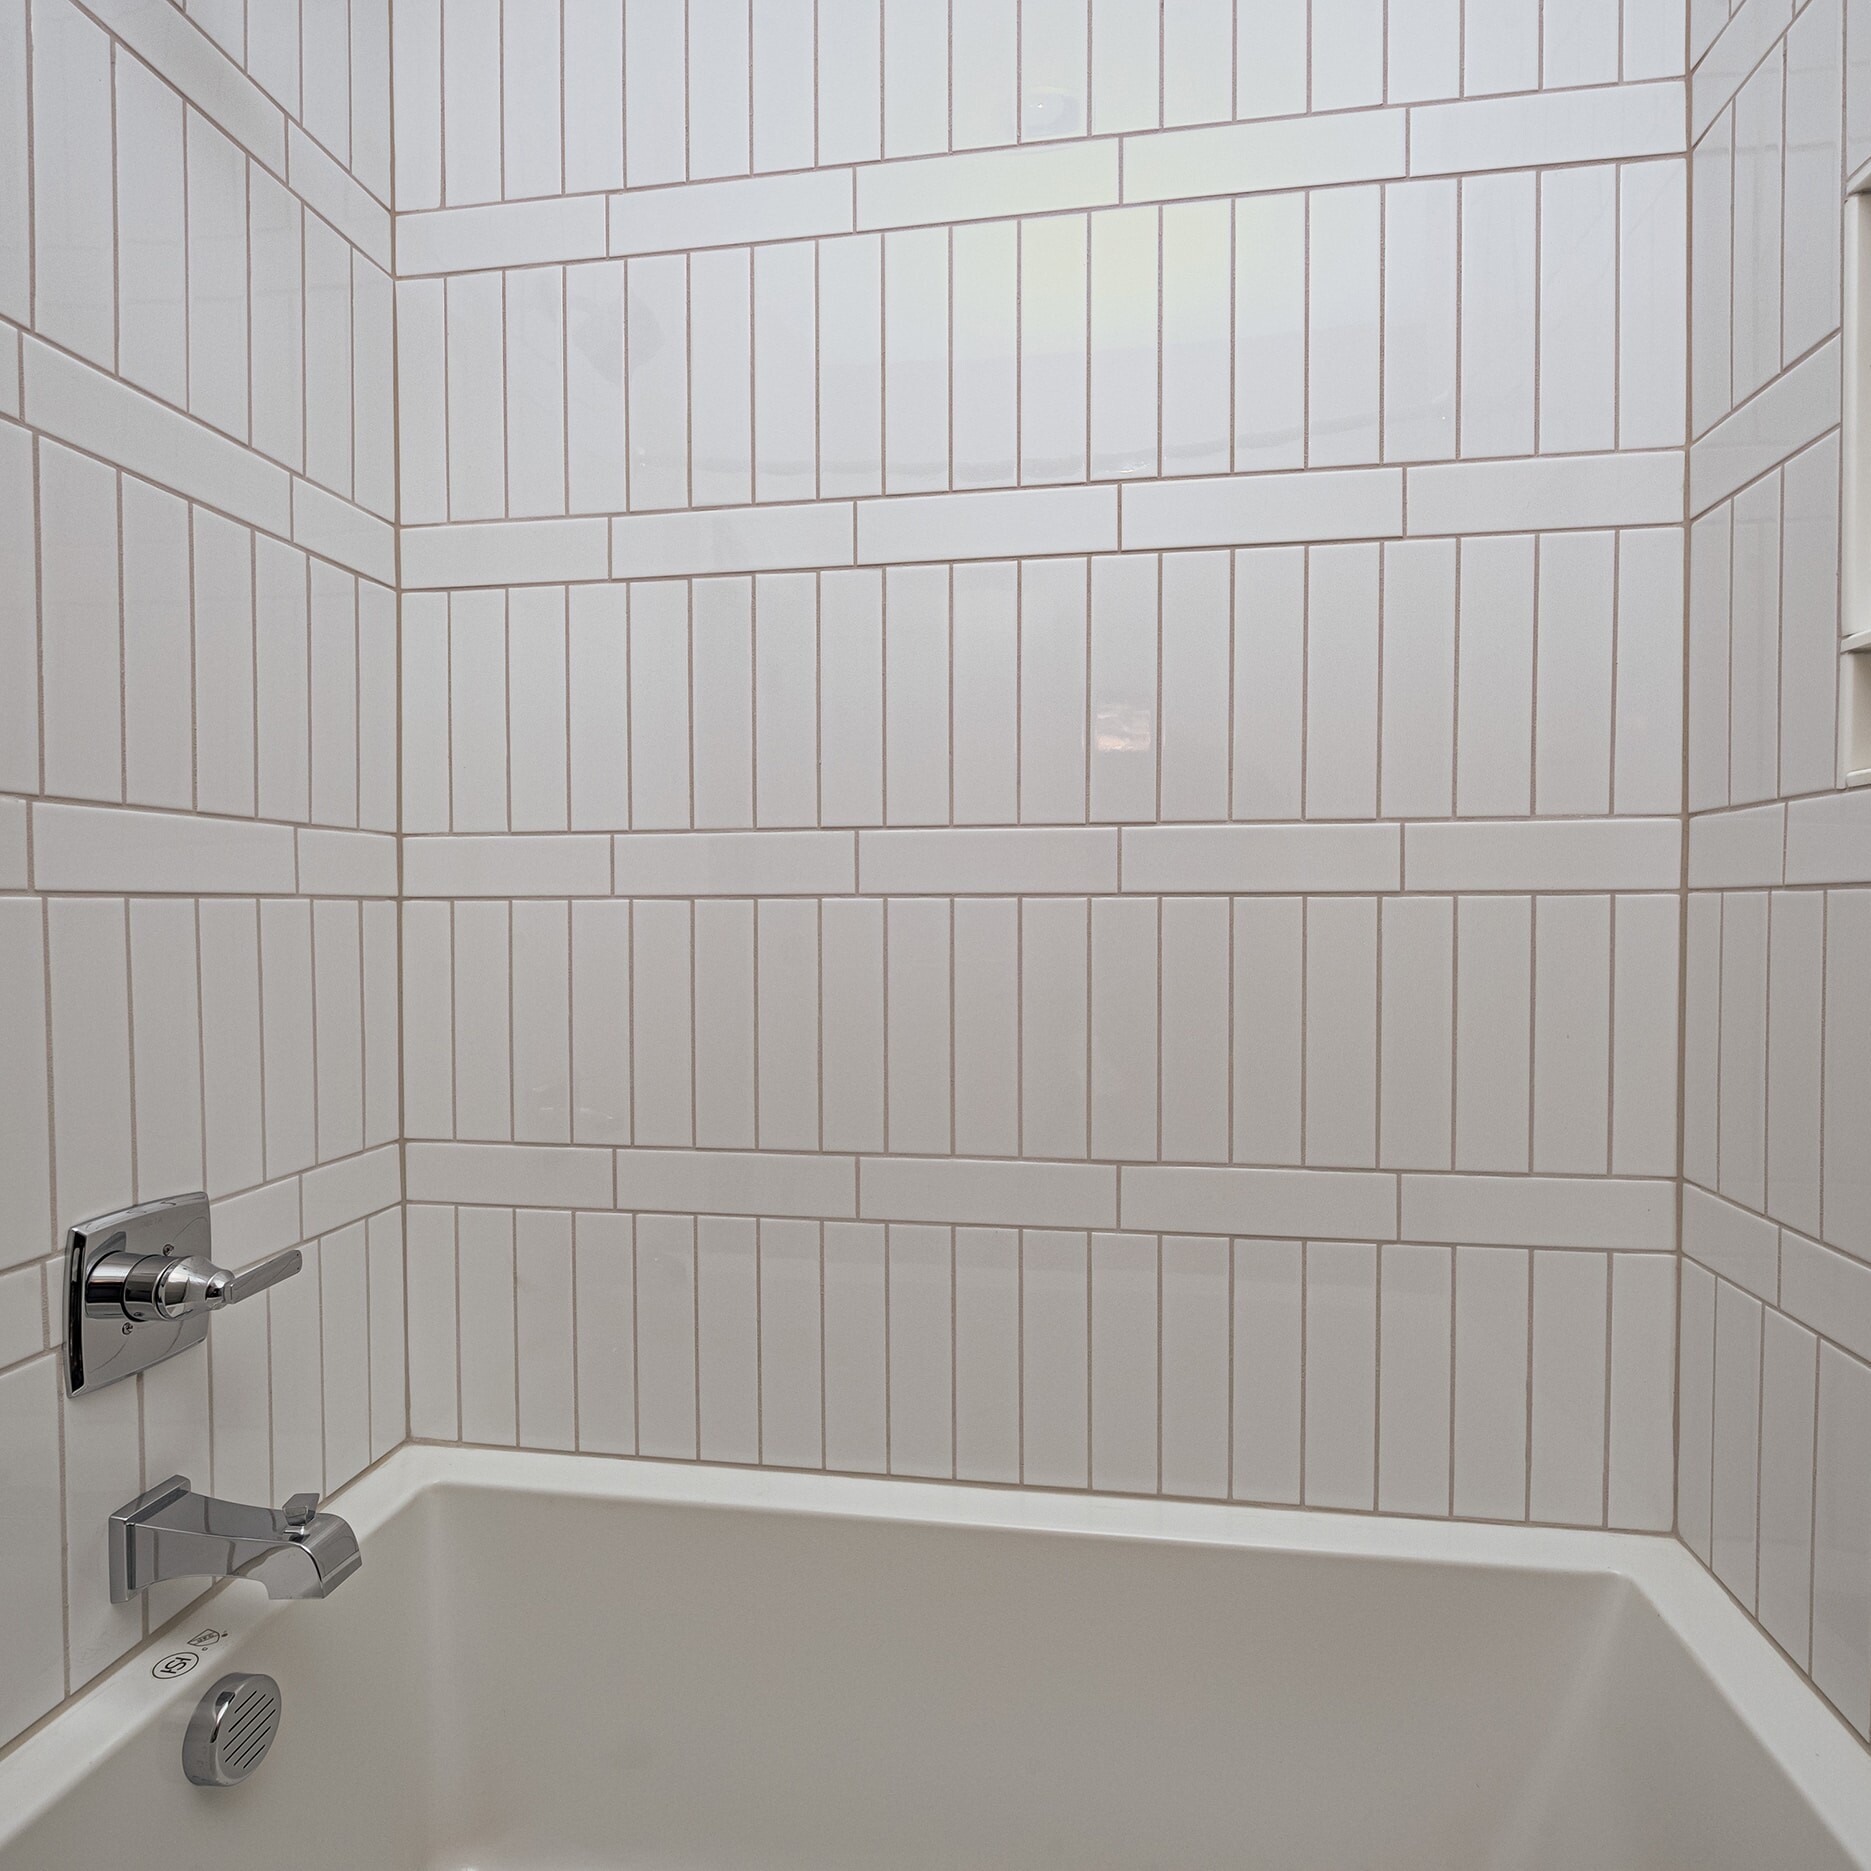 A white tiled bathroom with a tub.